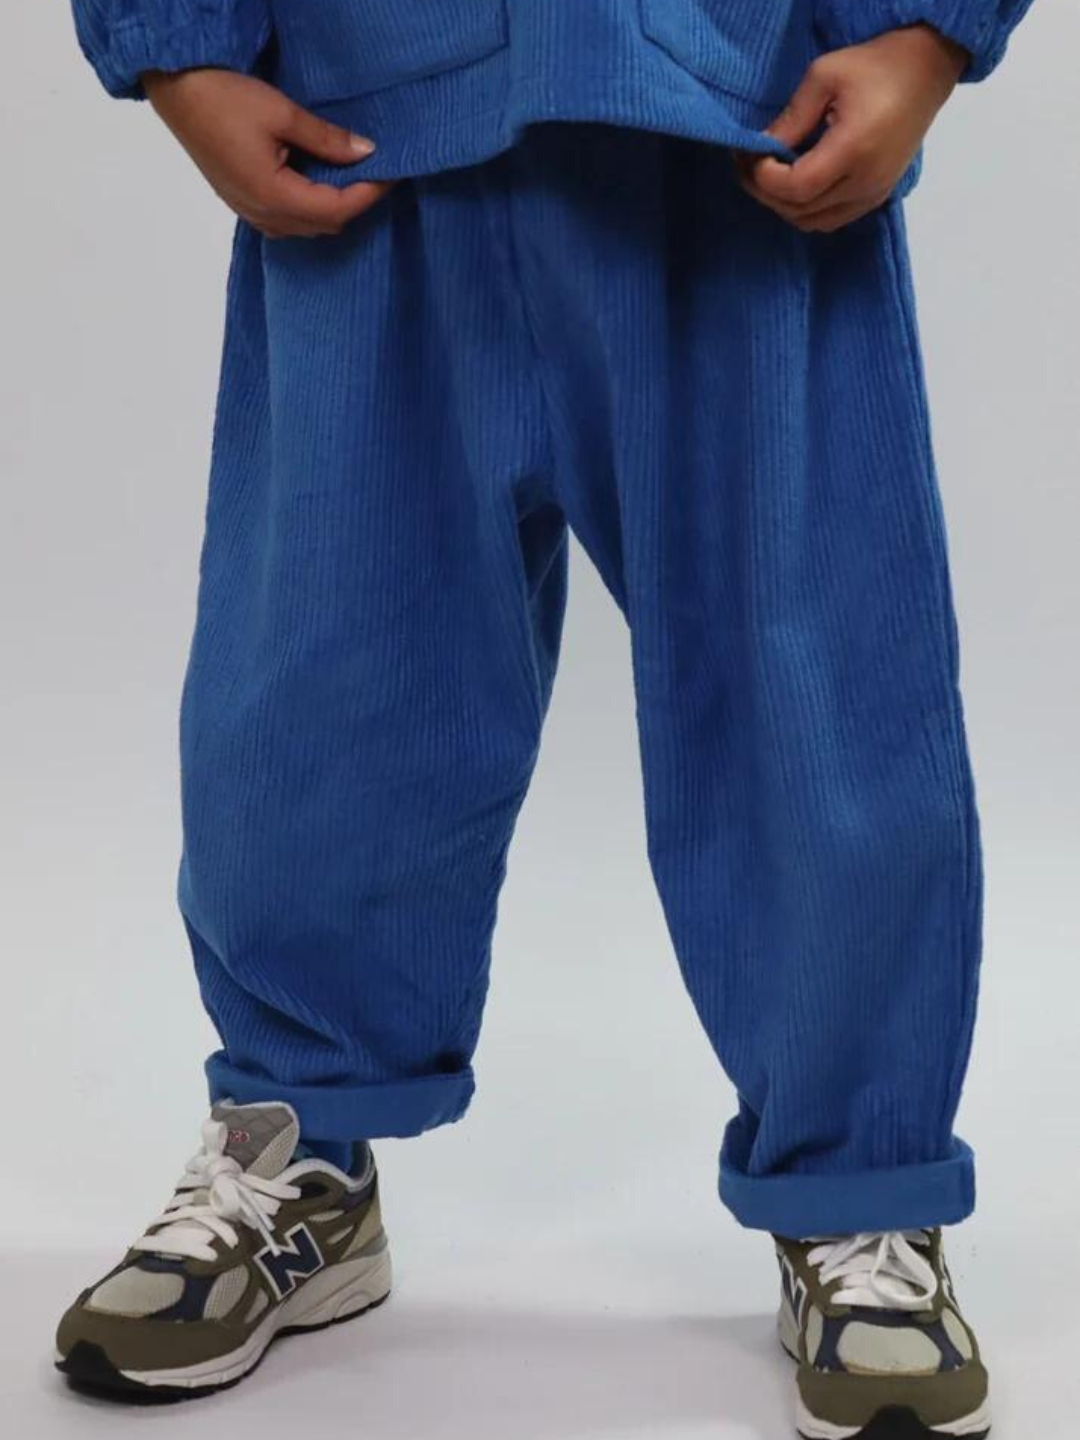 Blue | Child wearing blue kids' pants